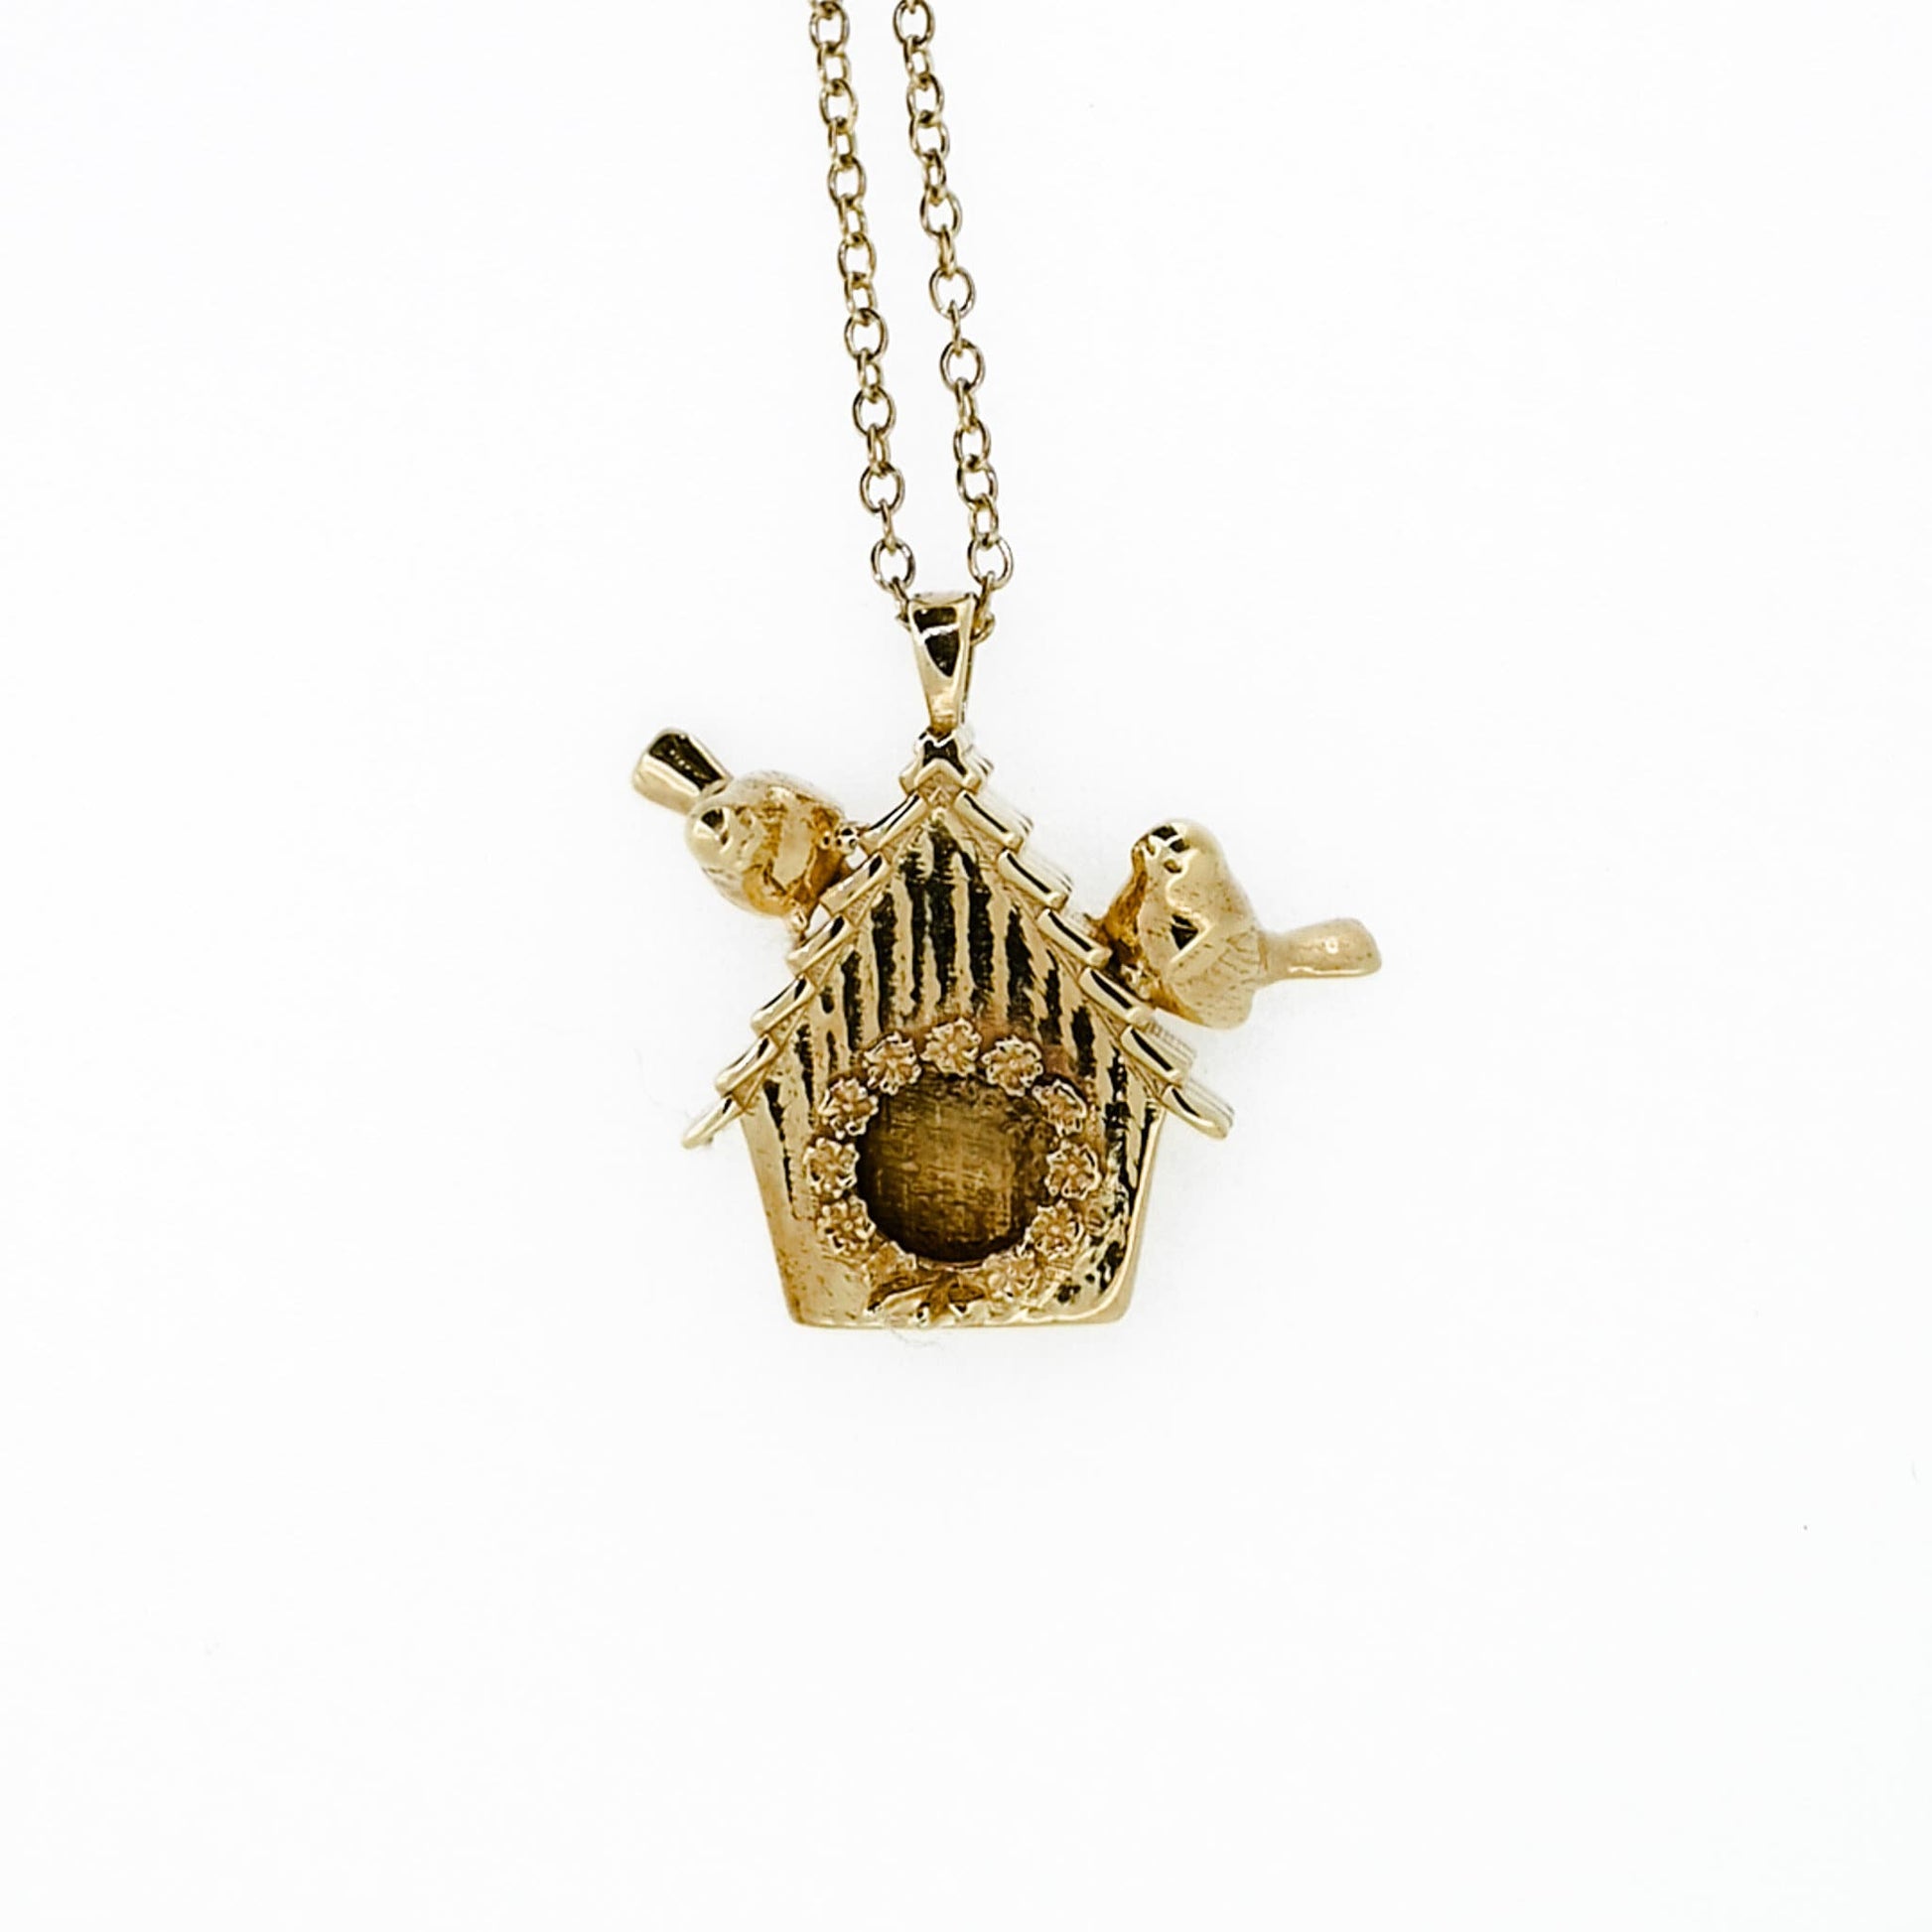 Birdhouse Pendant Necklace